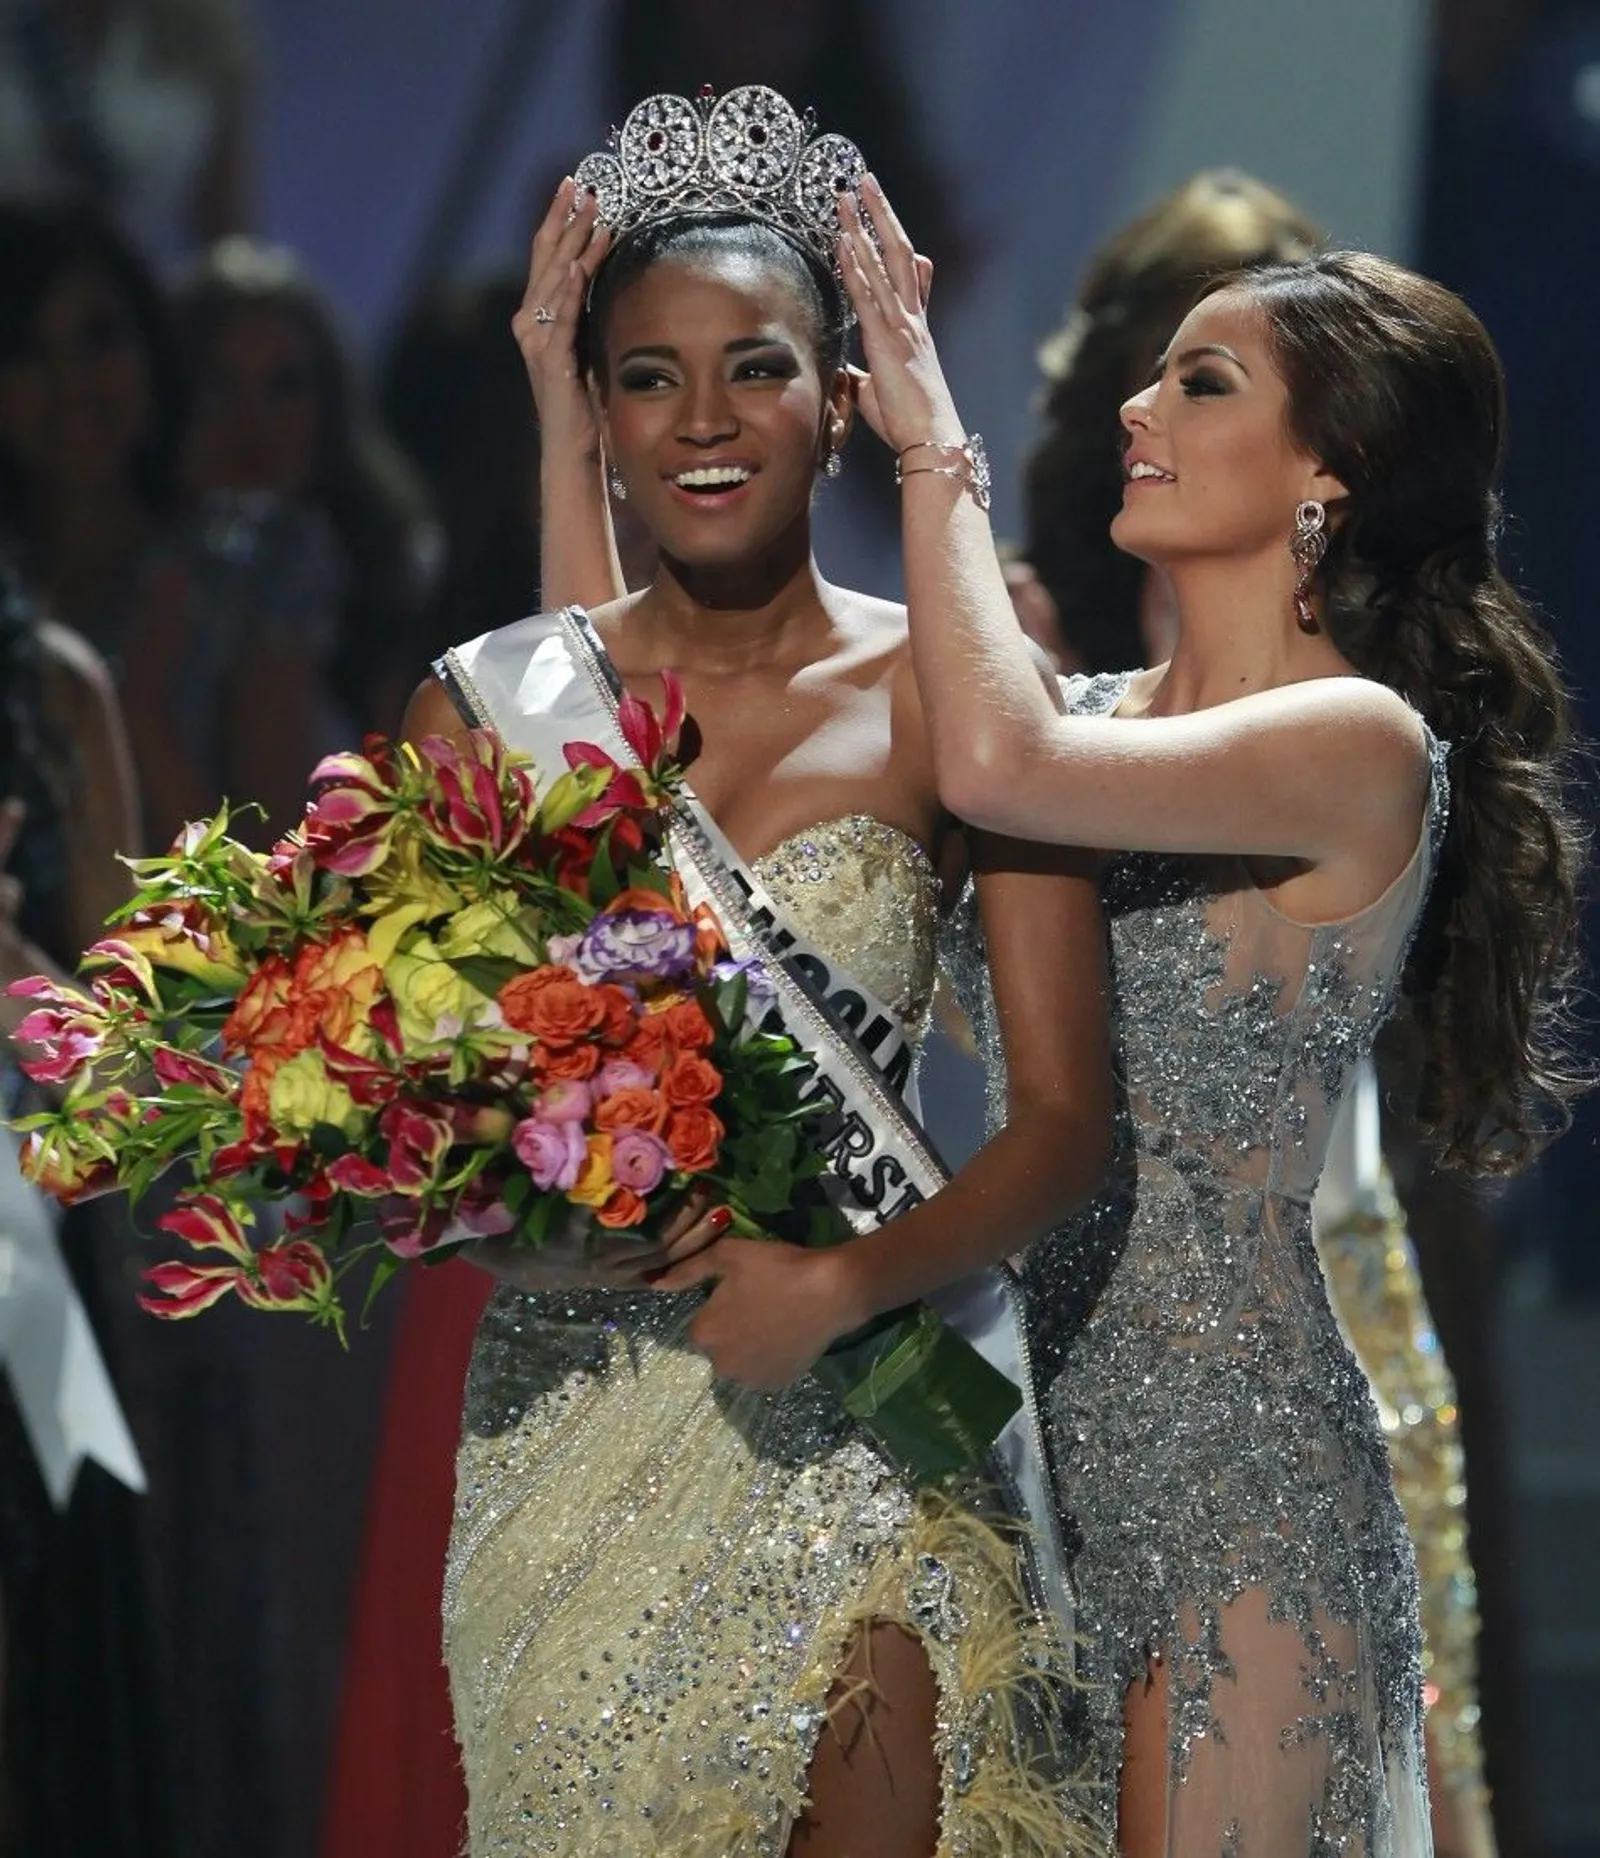 Deretan Pemenang Miss Universe Berkulit Gelap yang Bikin Kagum Dunia!